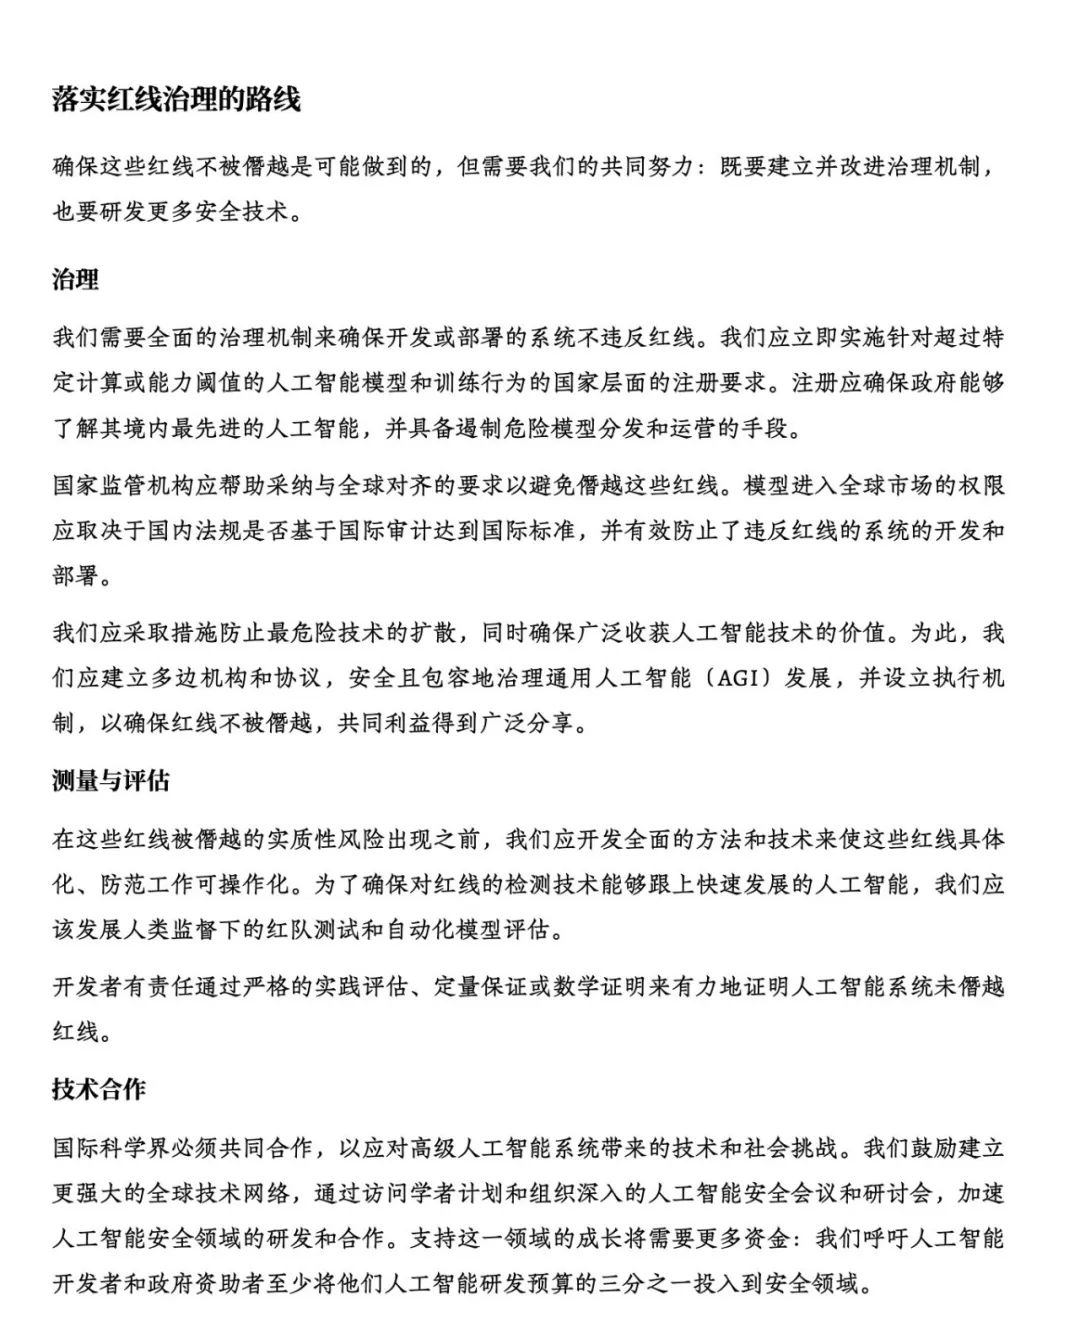 Hinton、Bengio、姚期智、傅莹、薛澜等签署“北京共识”：搭建中外AI安全合作平台